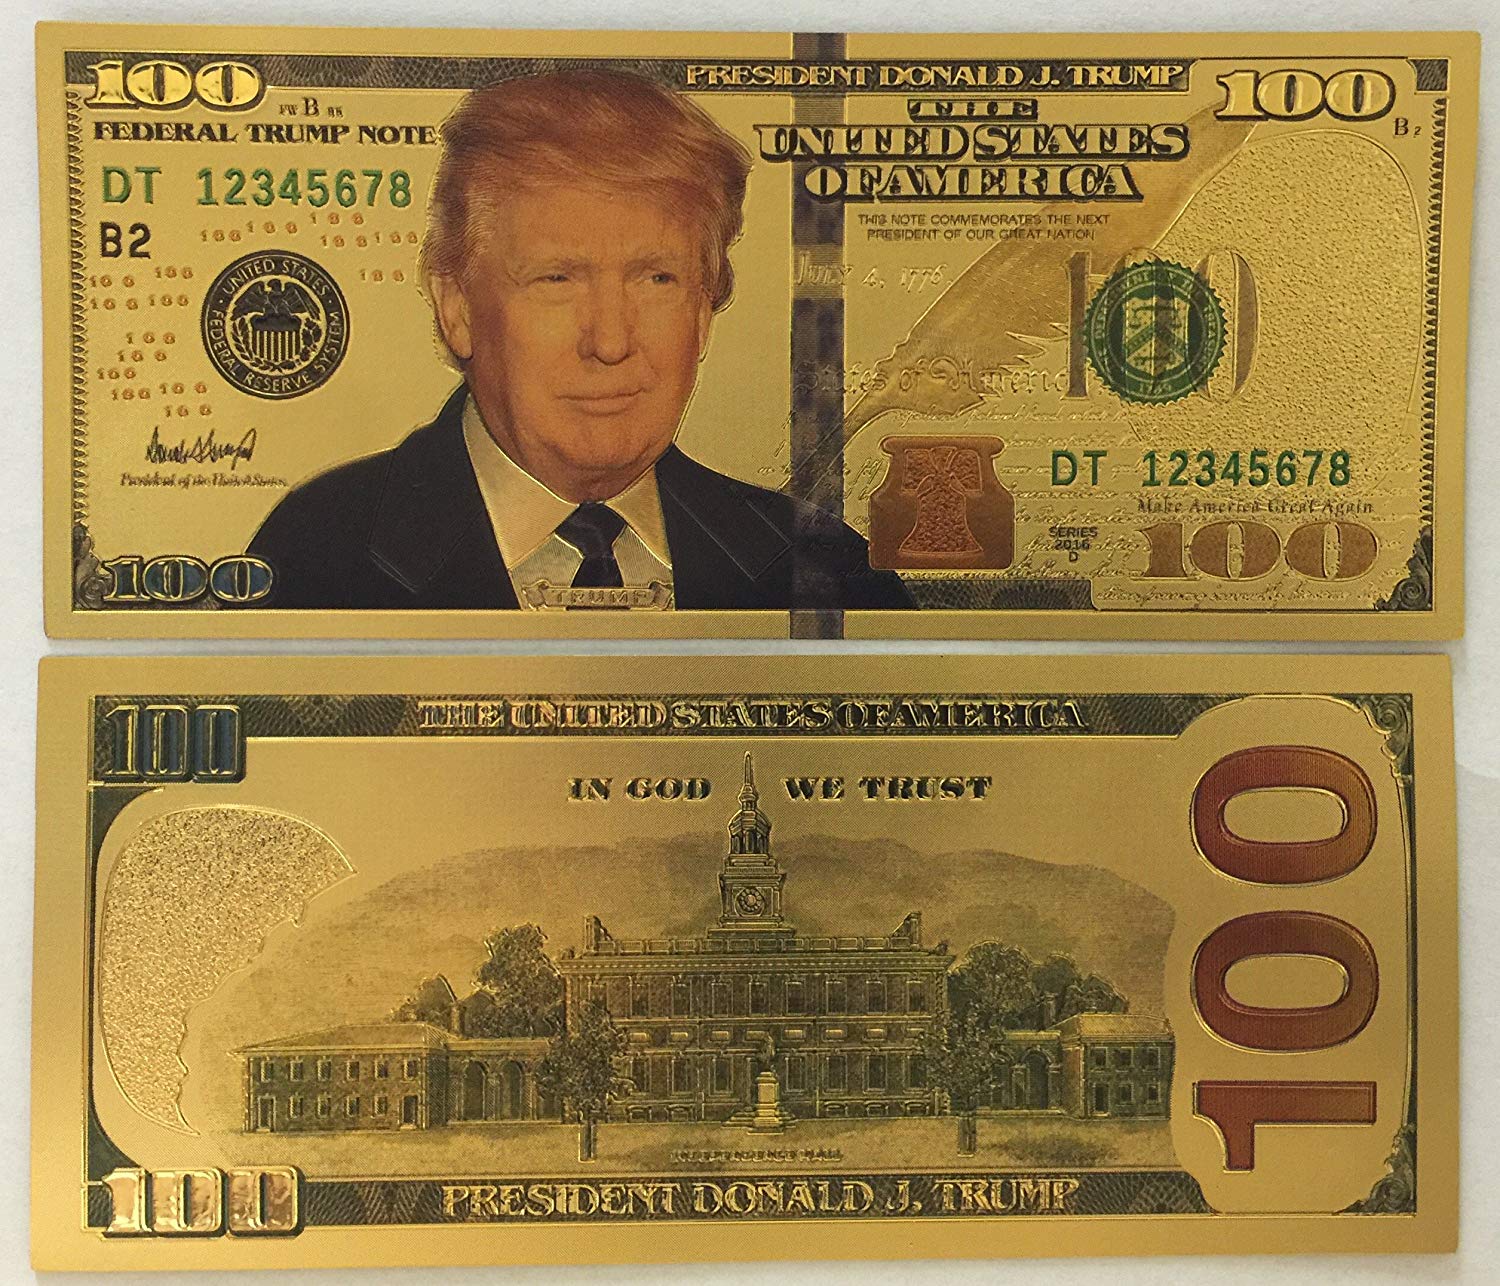 Amazon.com: Authentic $100 President Donald Trump Authentic 24kt ...